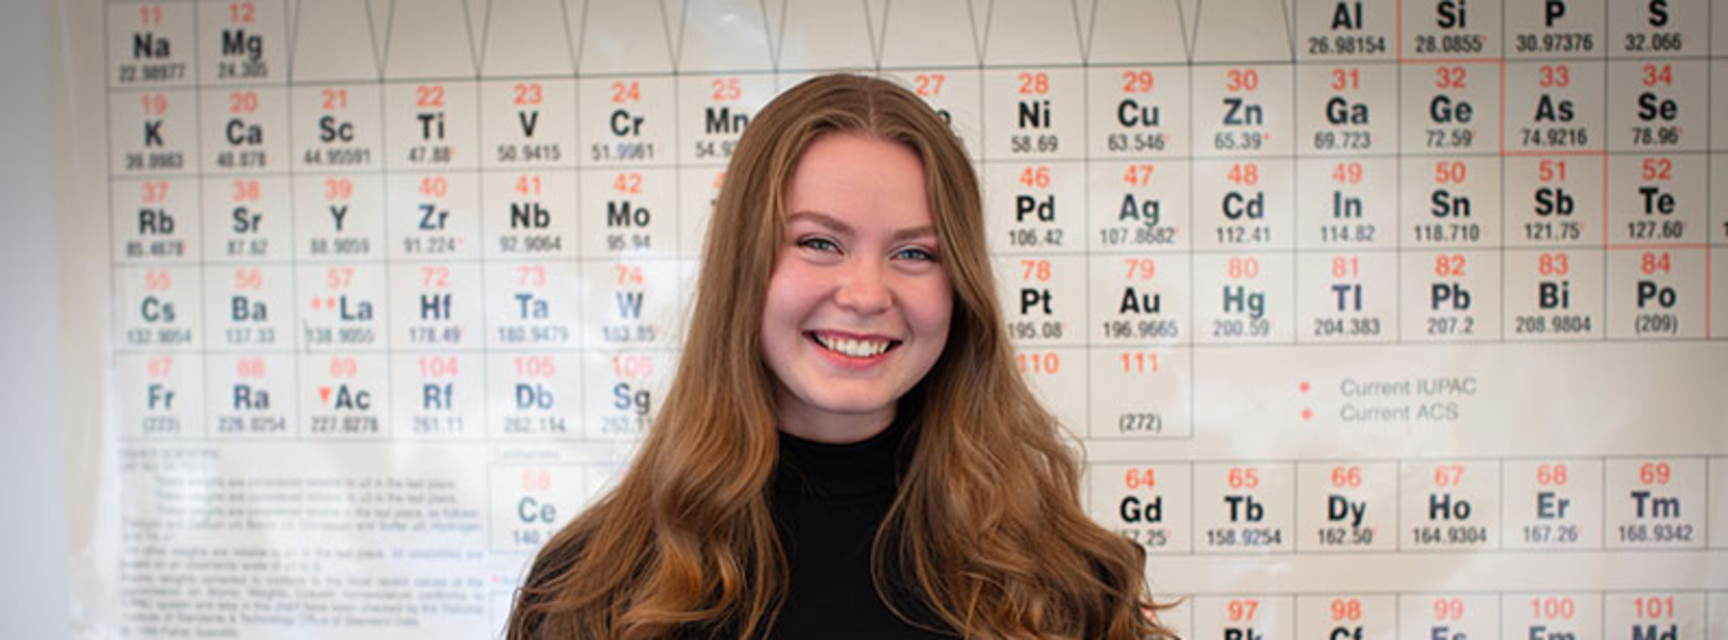 female chemistry student